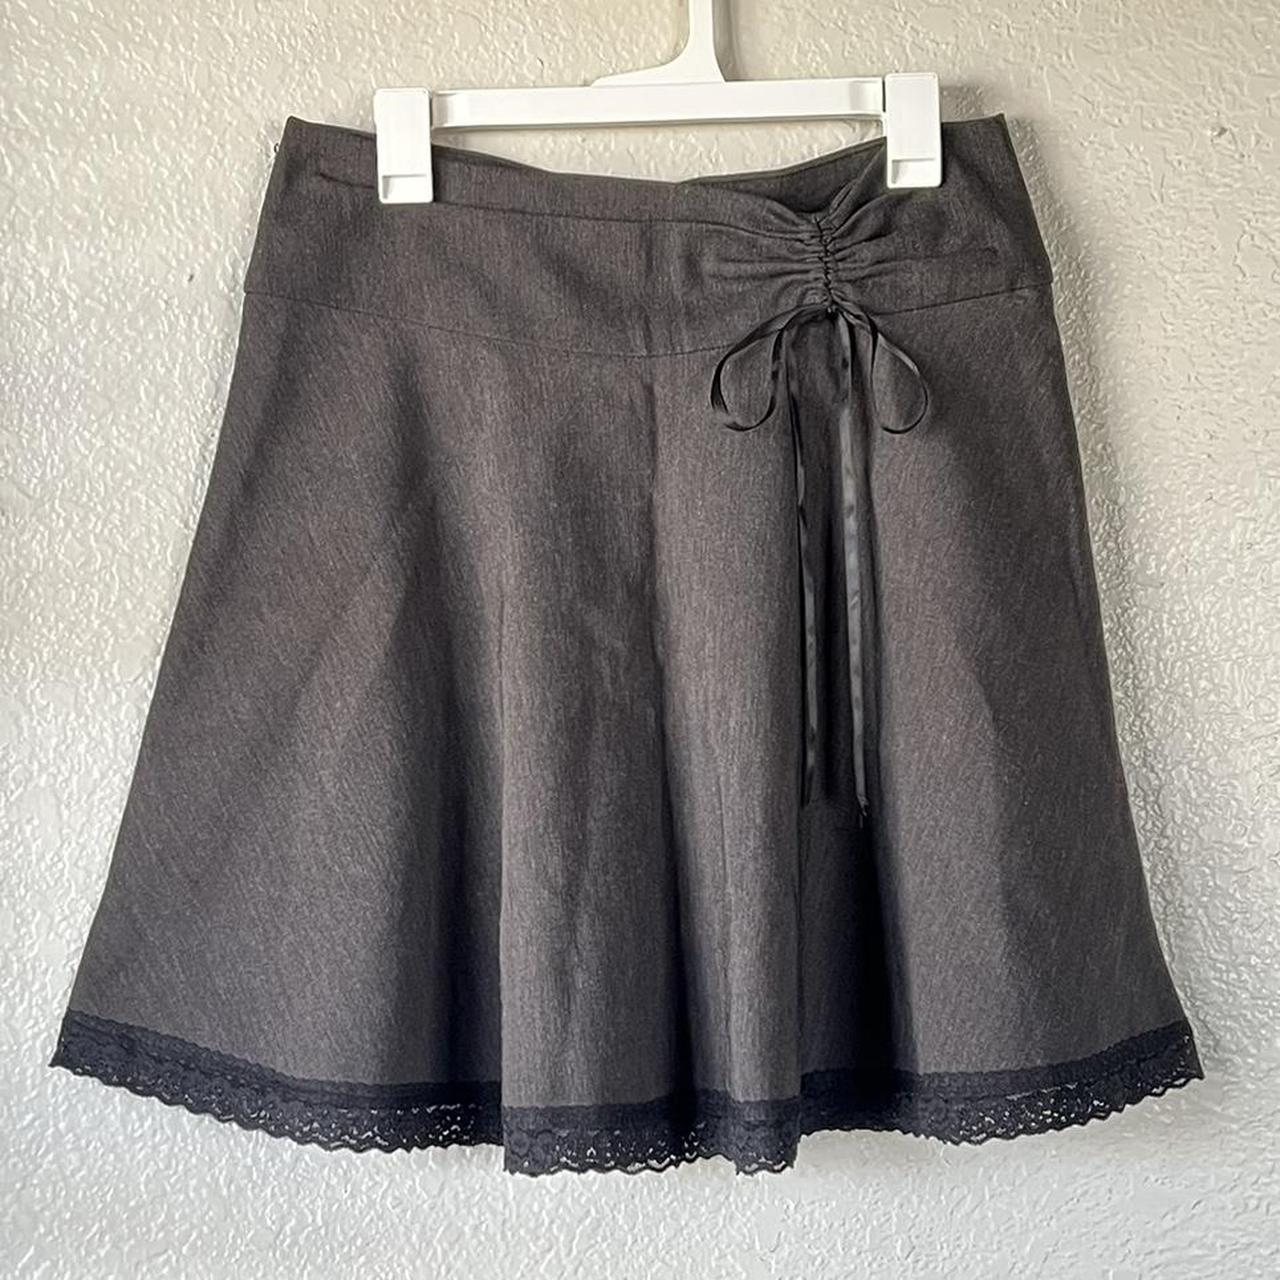 Dark academia Lace Bow skirt super cute knee-length... - Depop